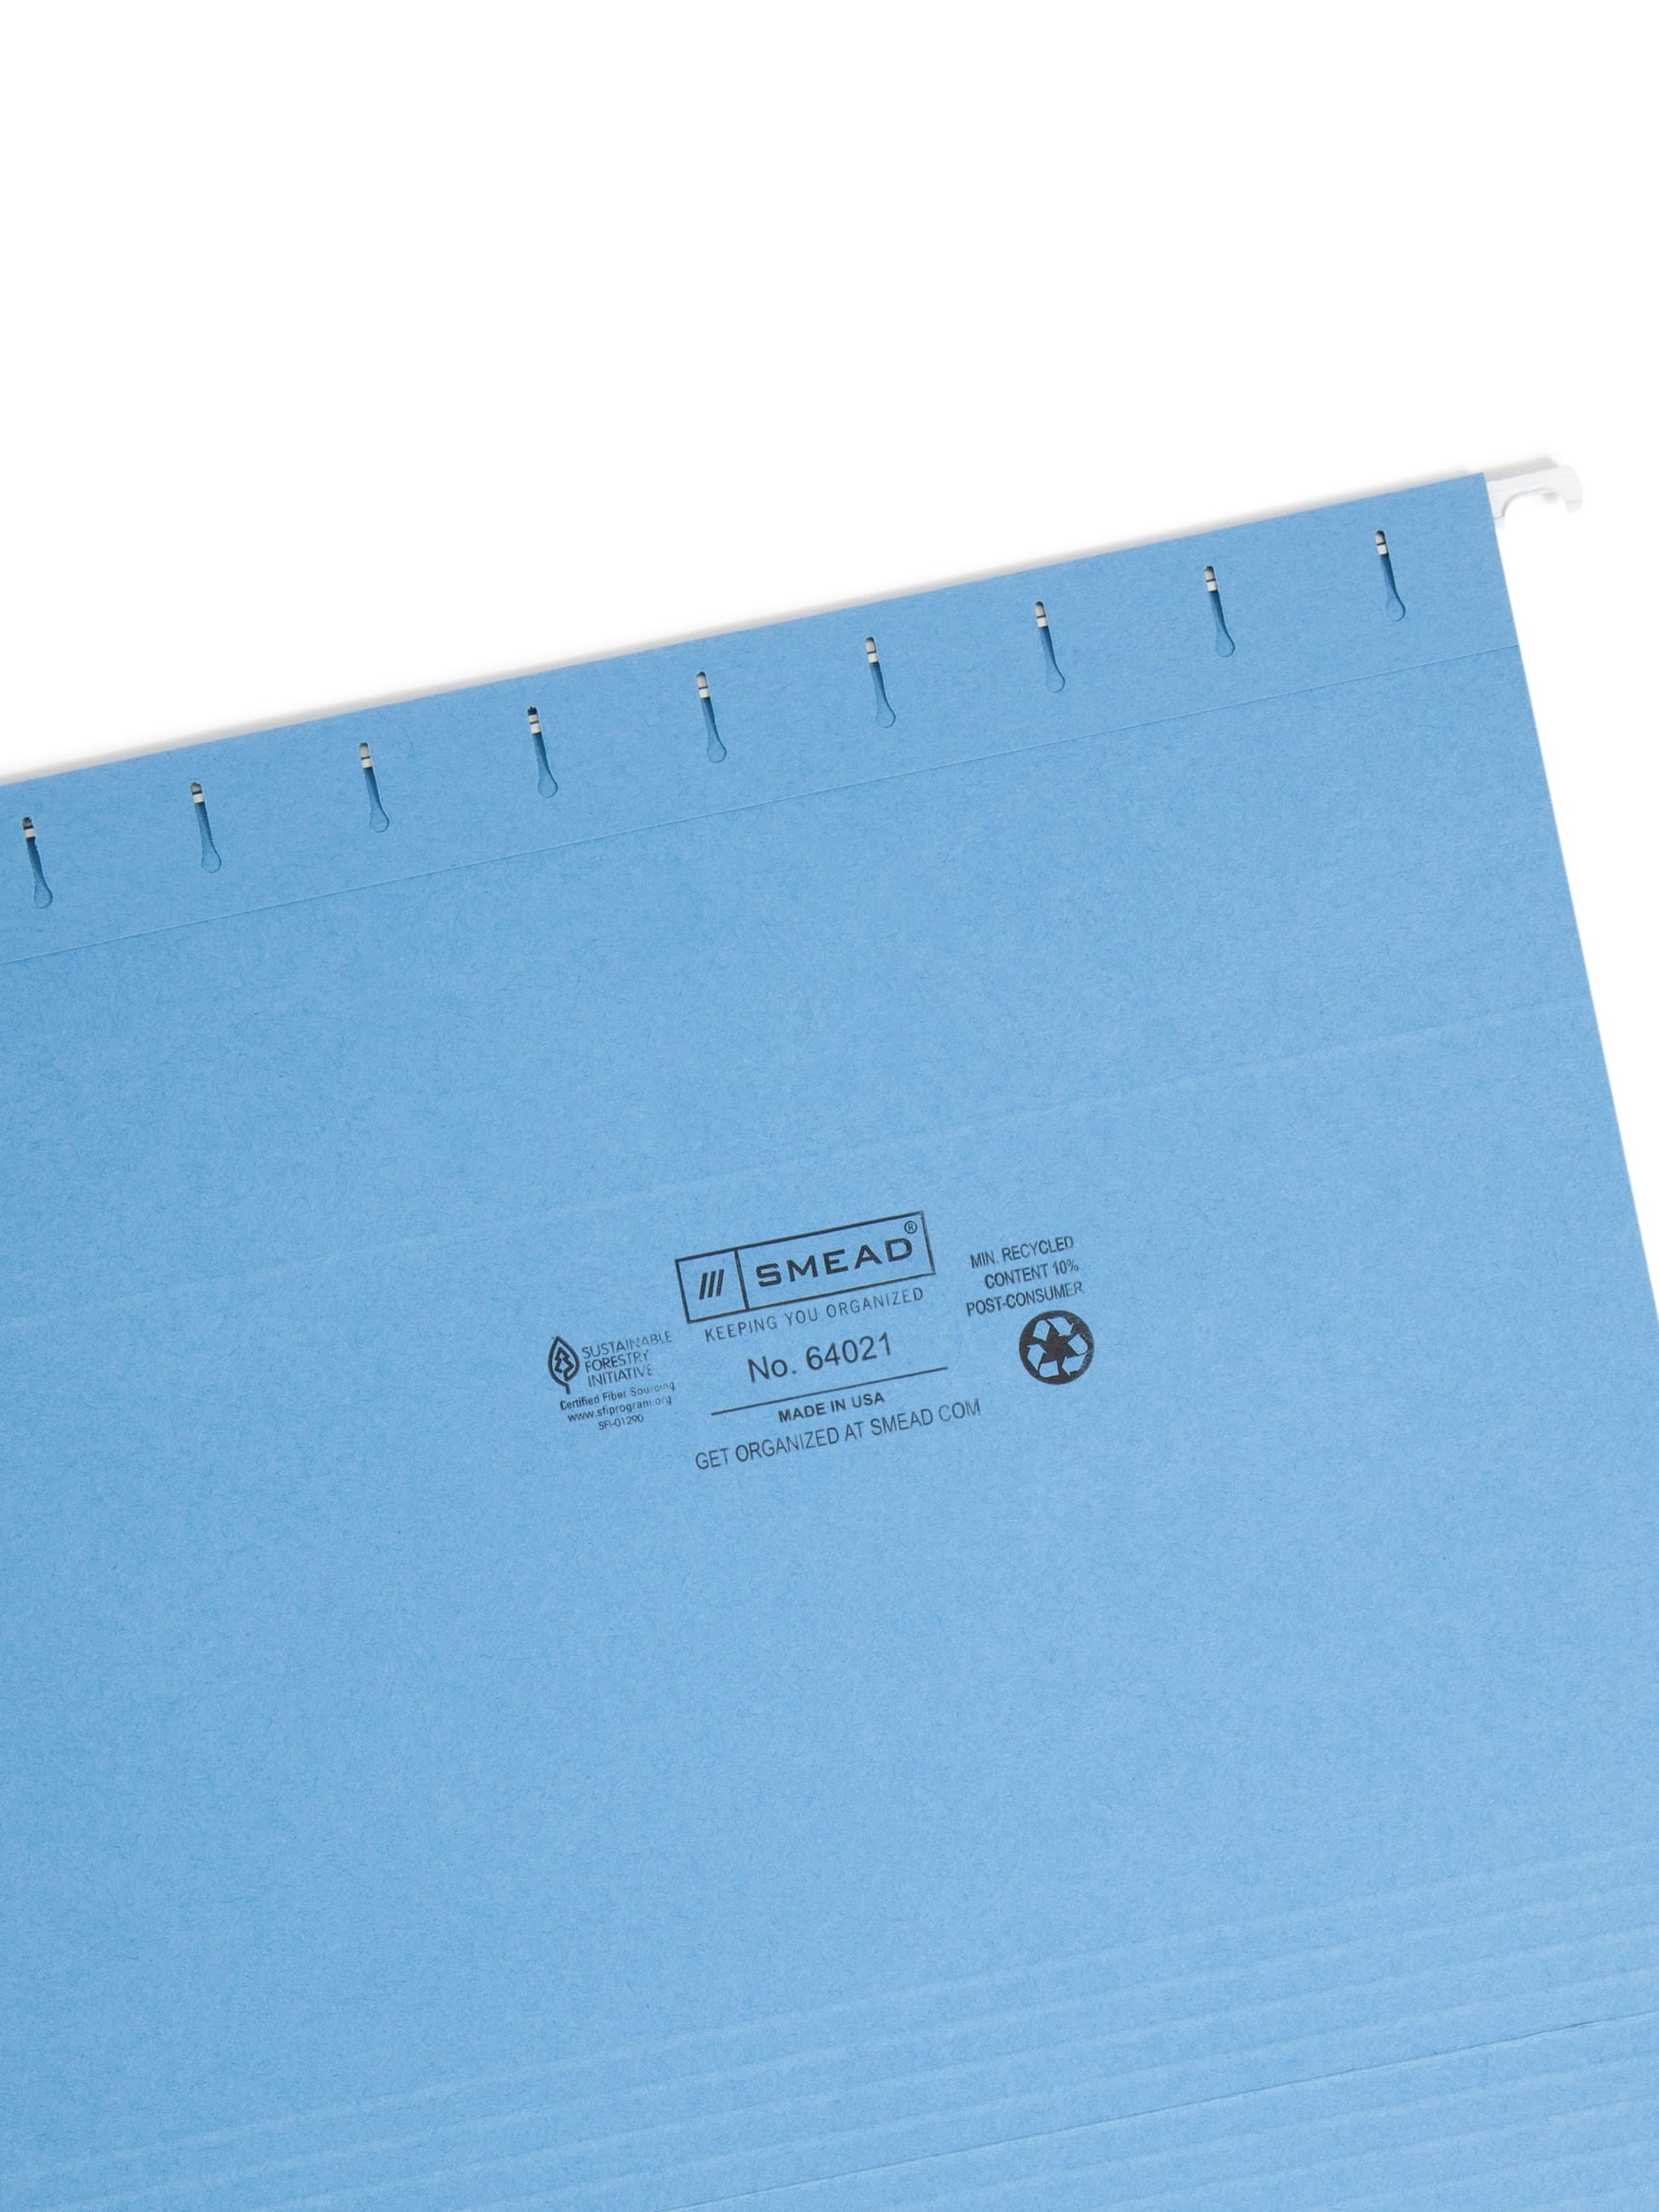 Standard Hanging File Folders with 1/3-Cut Tabs, Blue Color, Letter Size, Set of 25, 086486640213